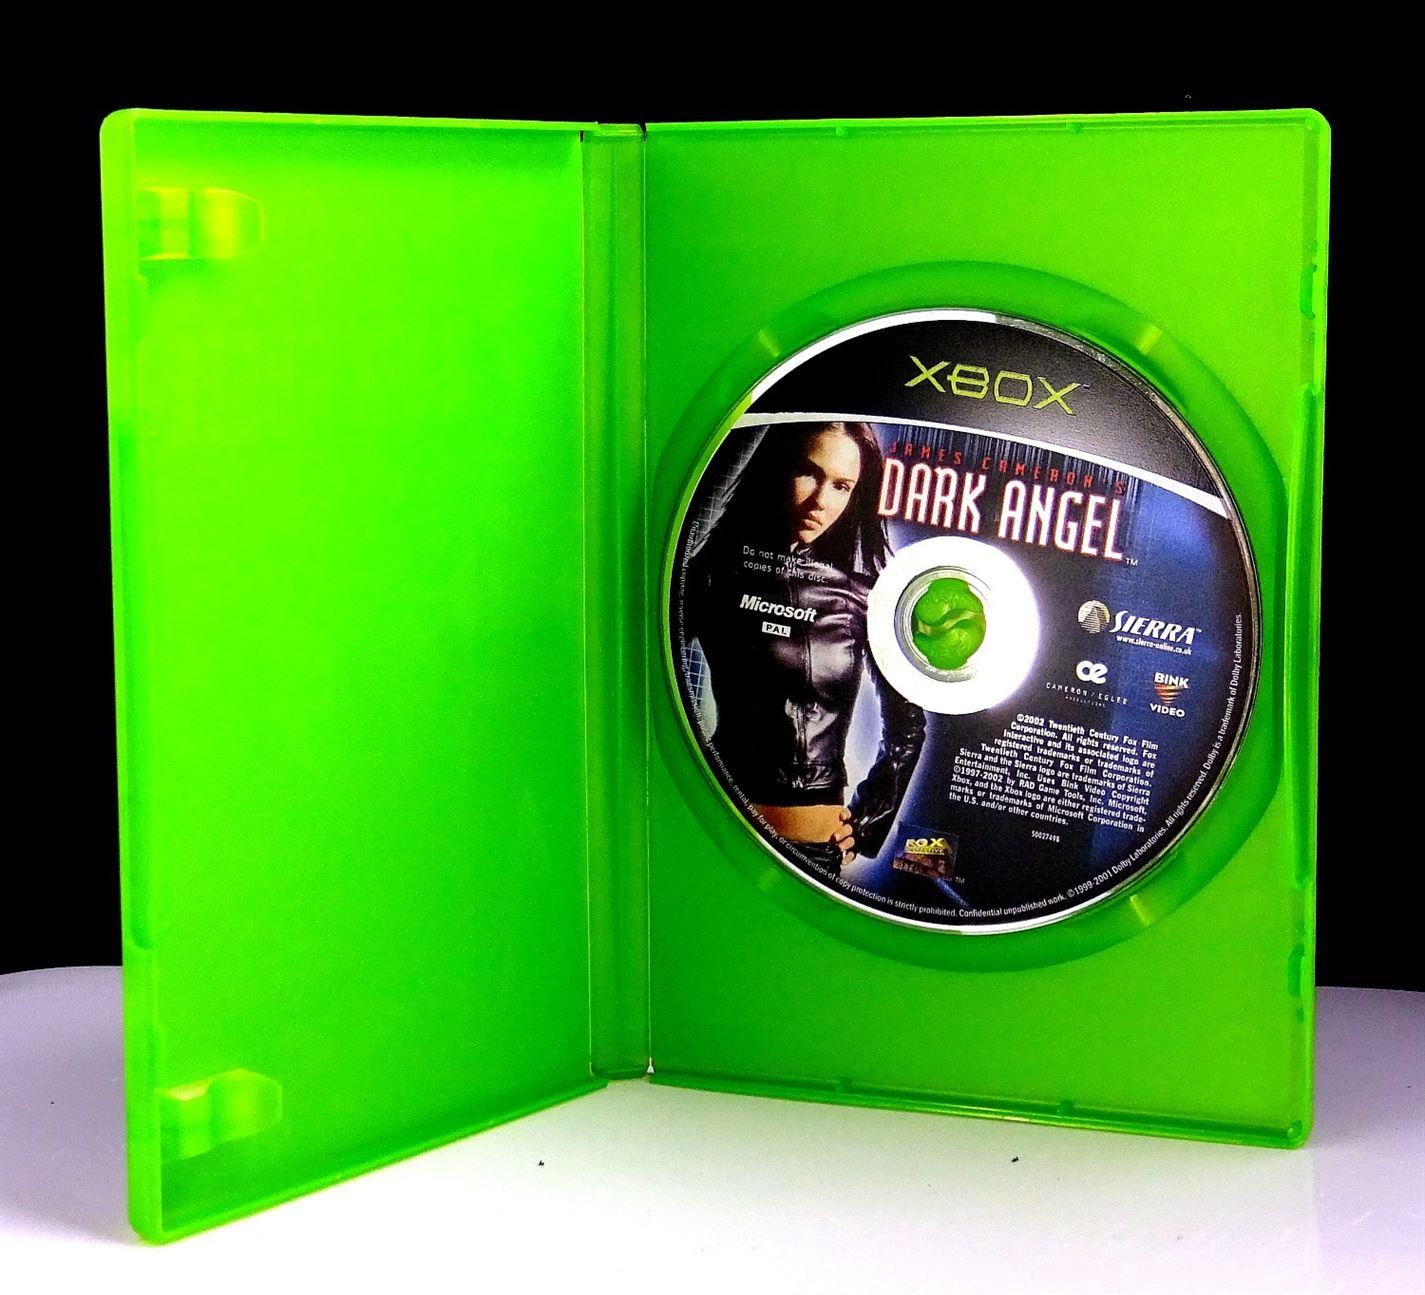 James Cameron Dark Angel (Xbox) - UK Seller